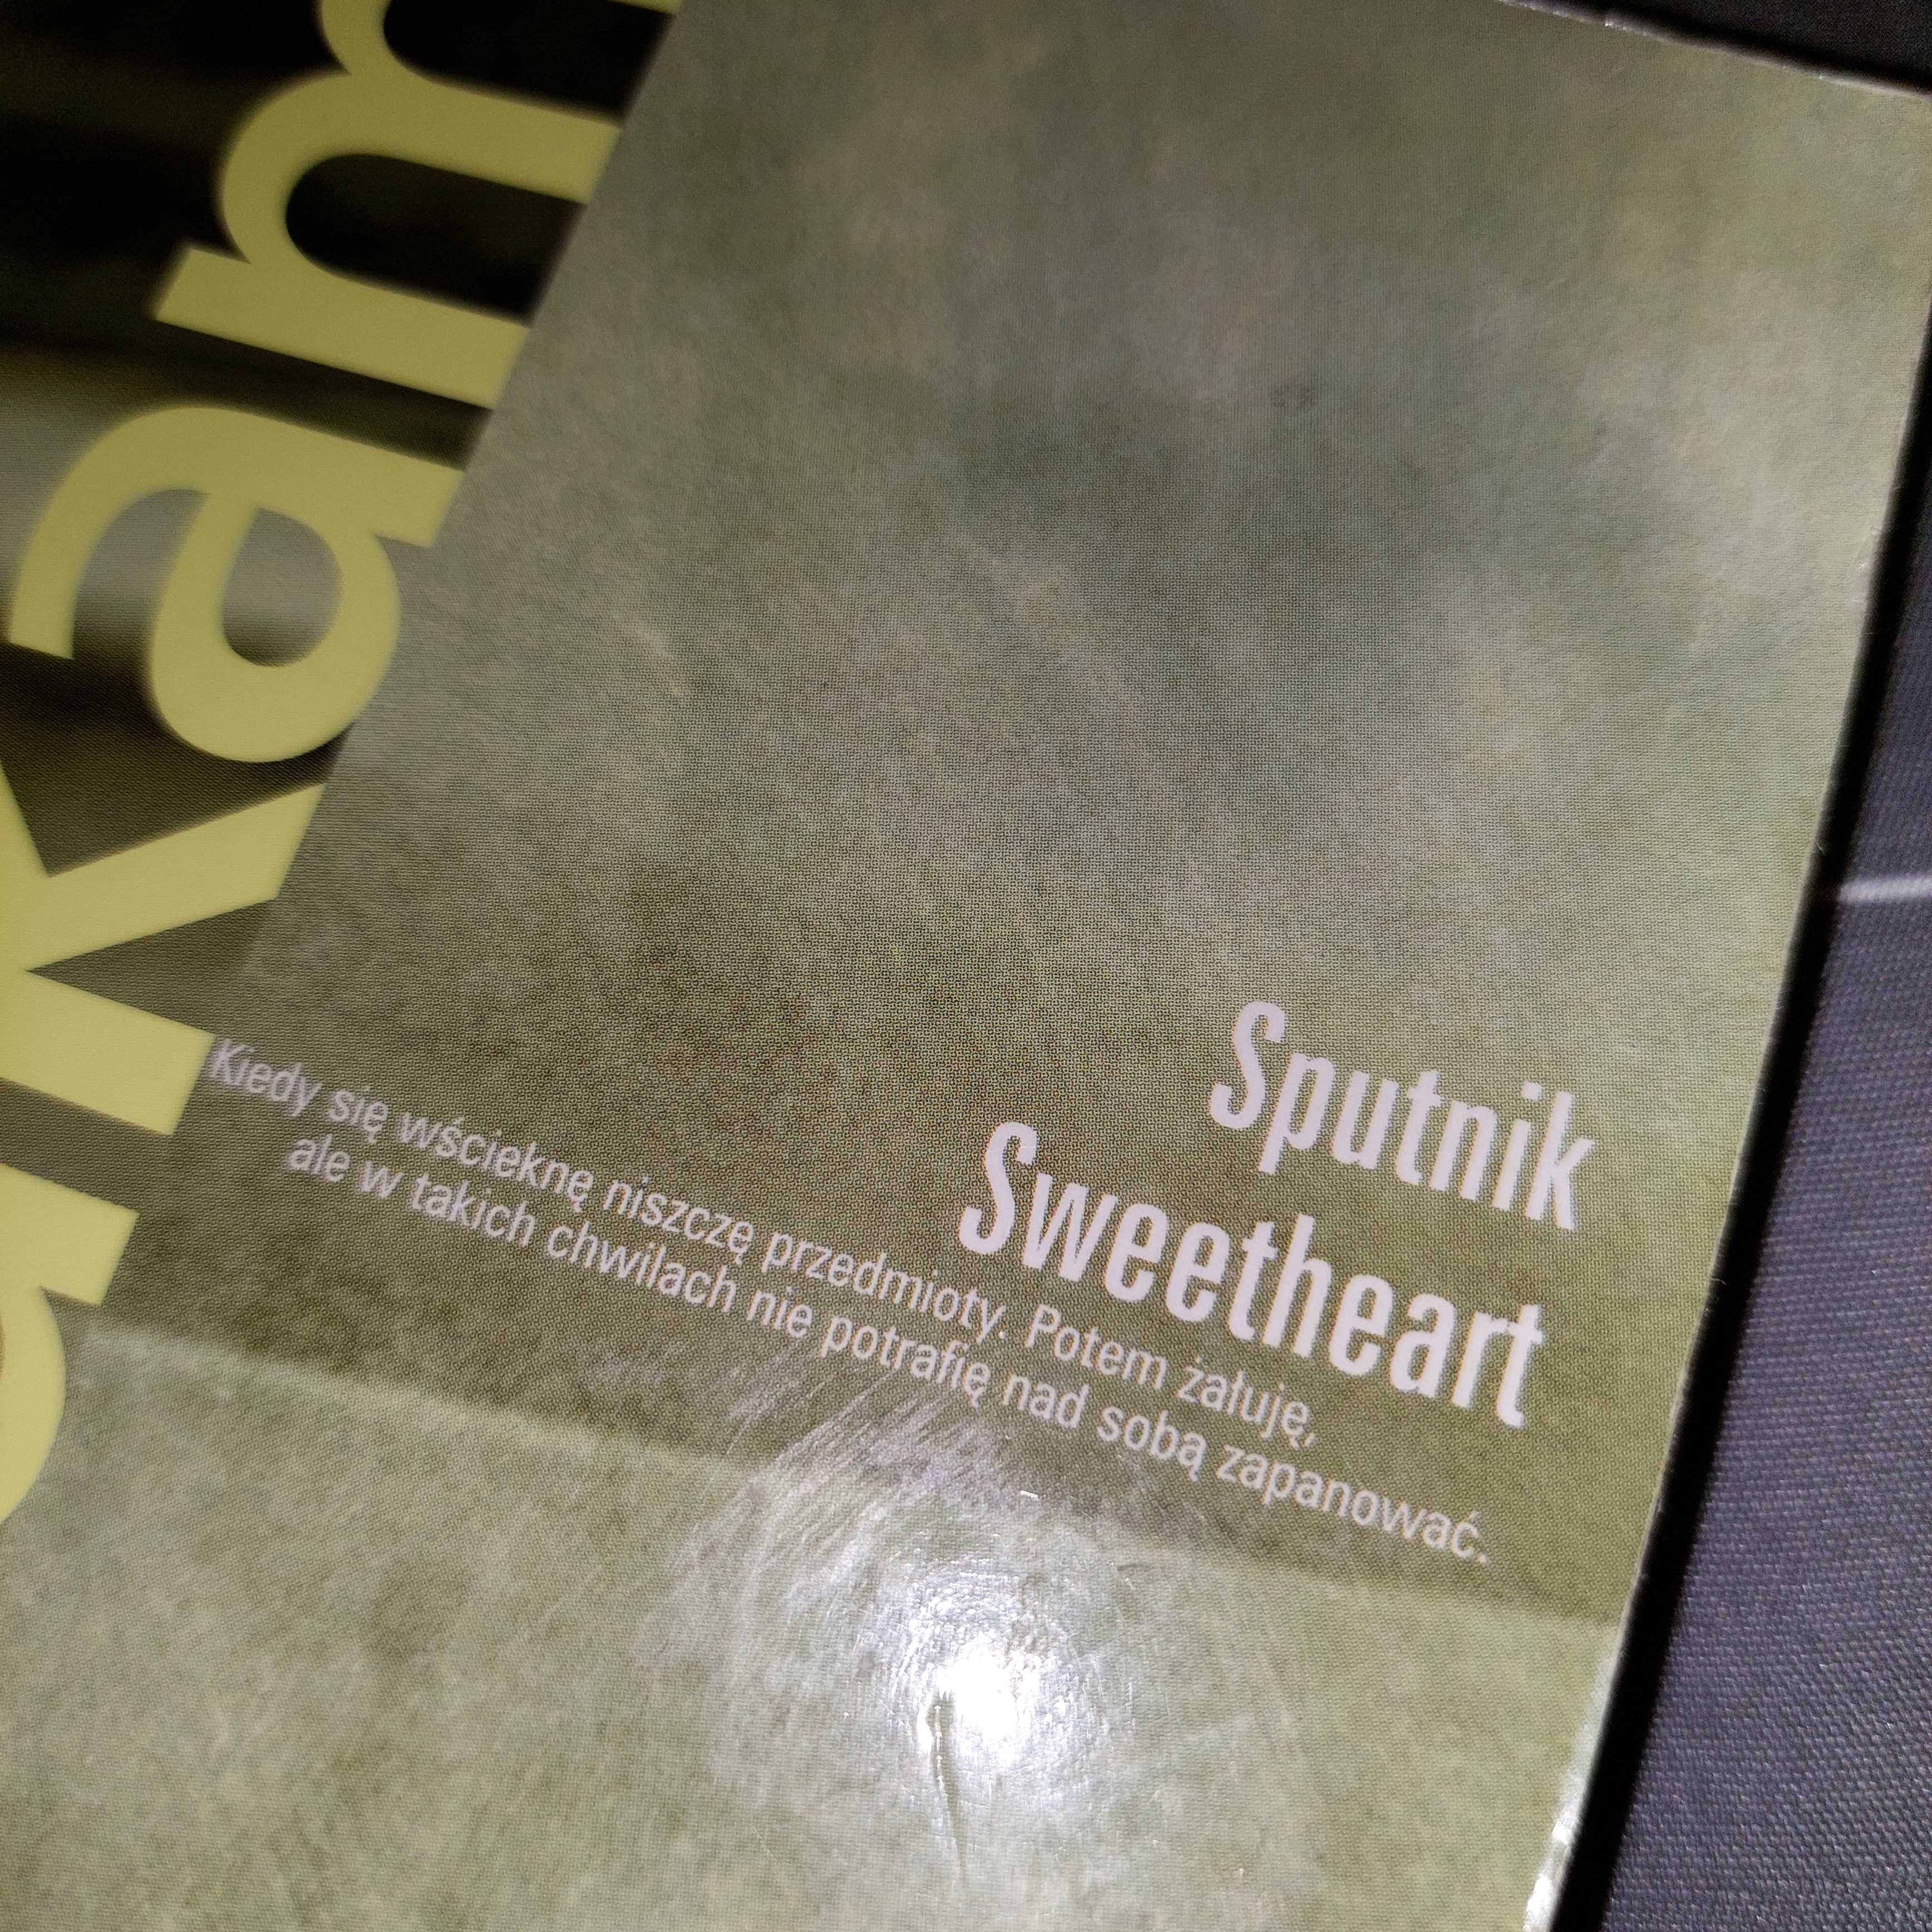 Haruki Murakami "Sputnik Sweetheart"